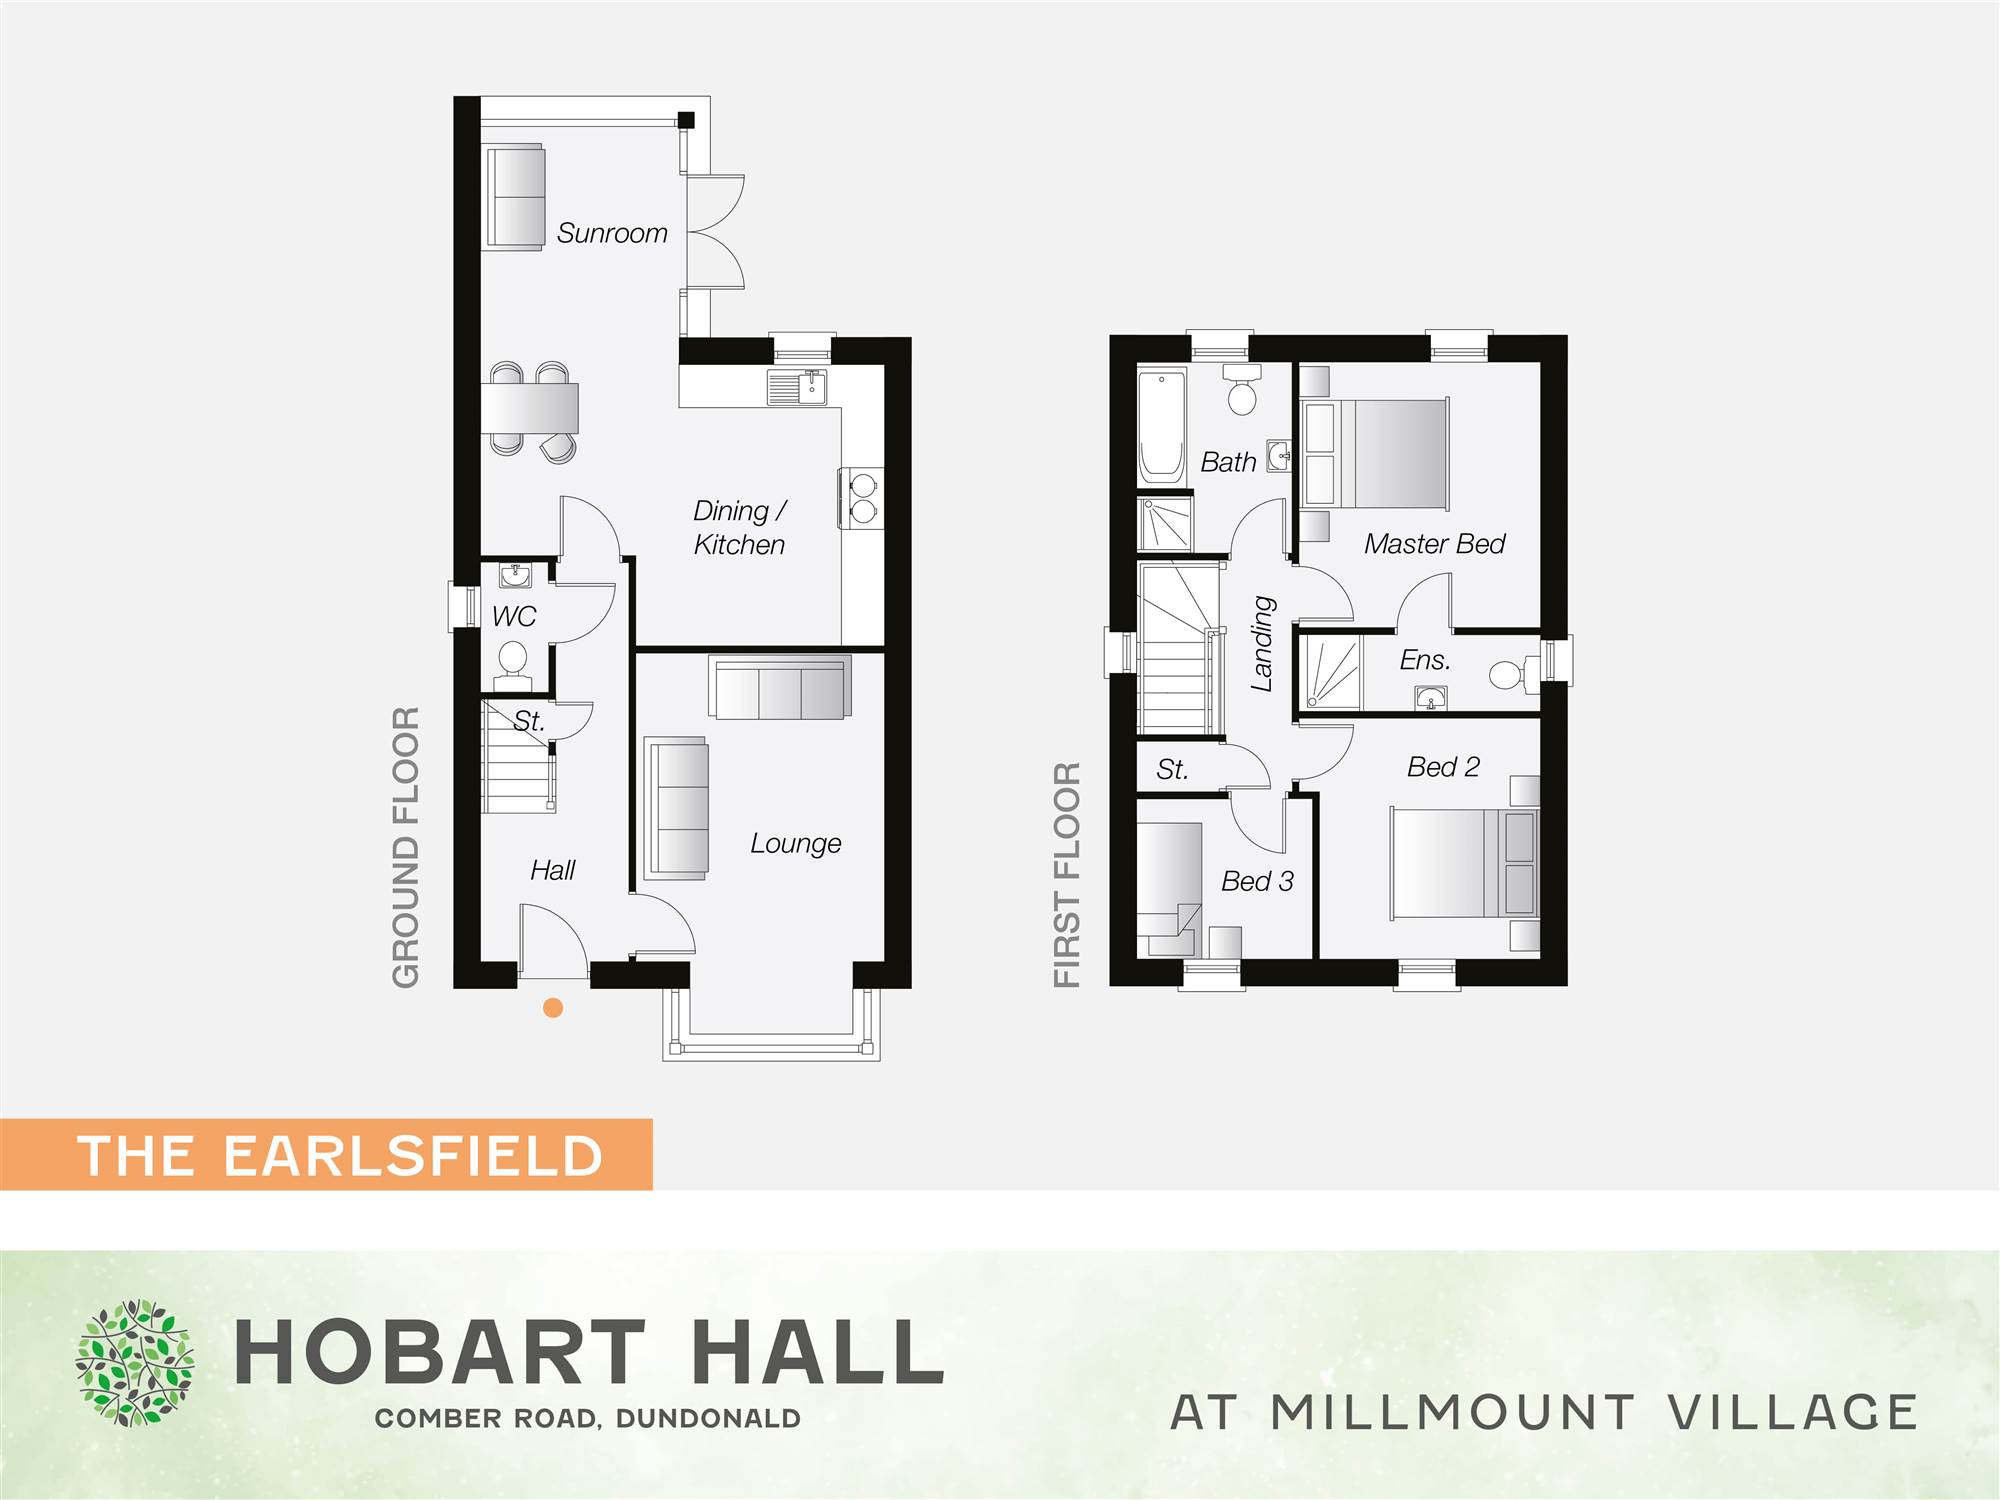 10 Hobart Hall at Millmount Village